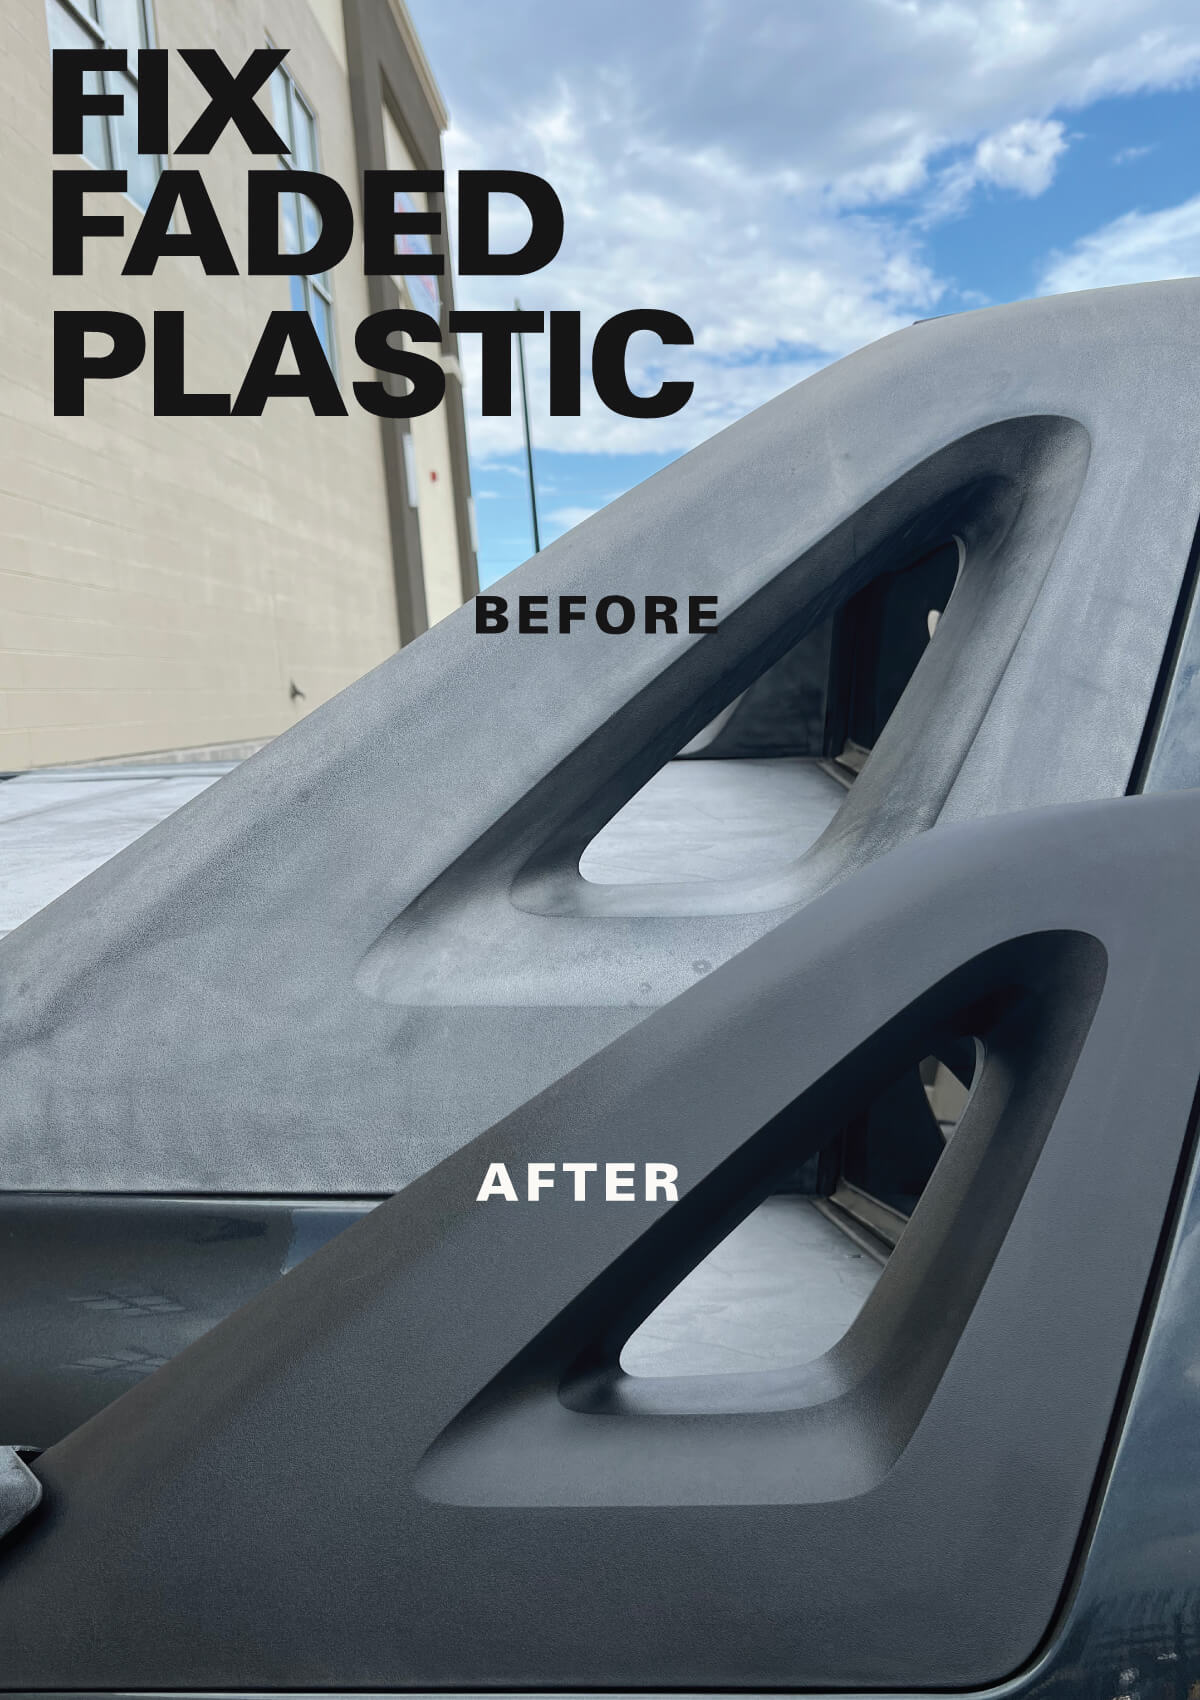 Trim Restorer that lasts  Most plastic and trim restores don't